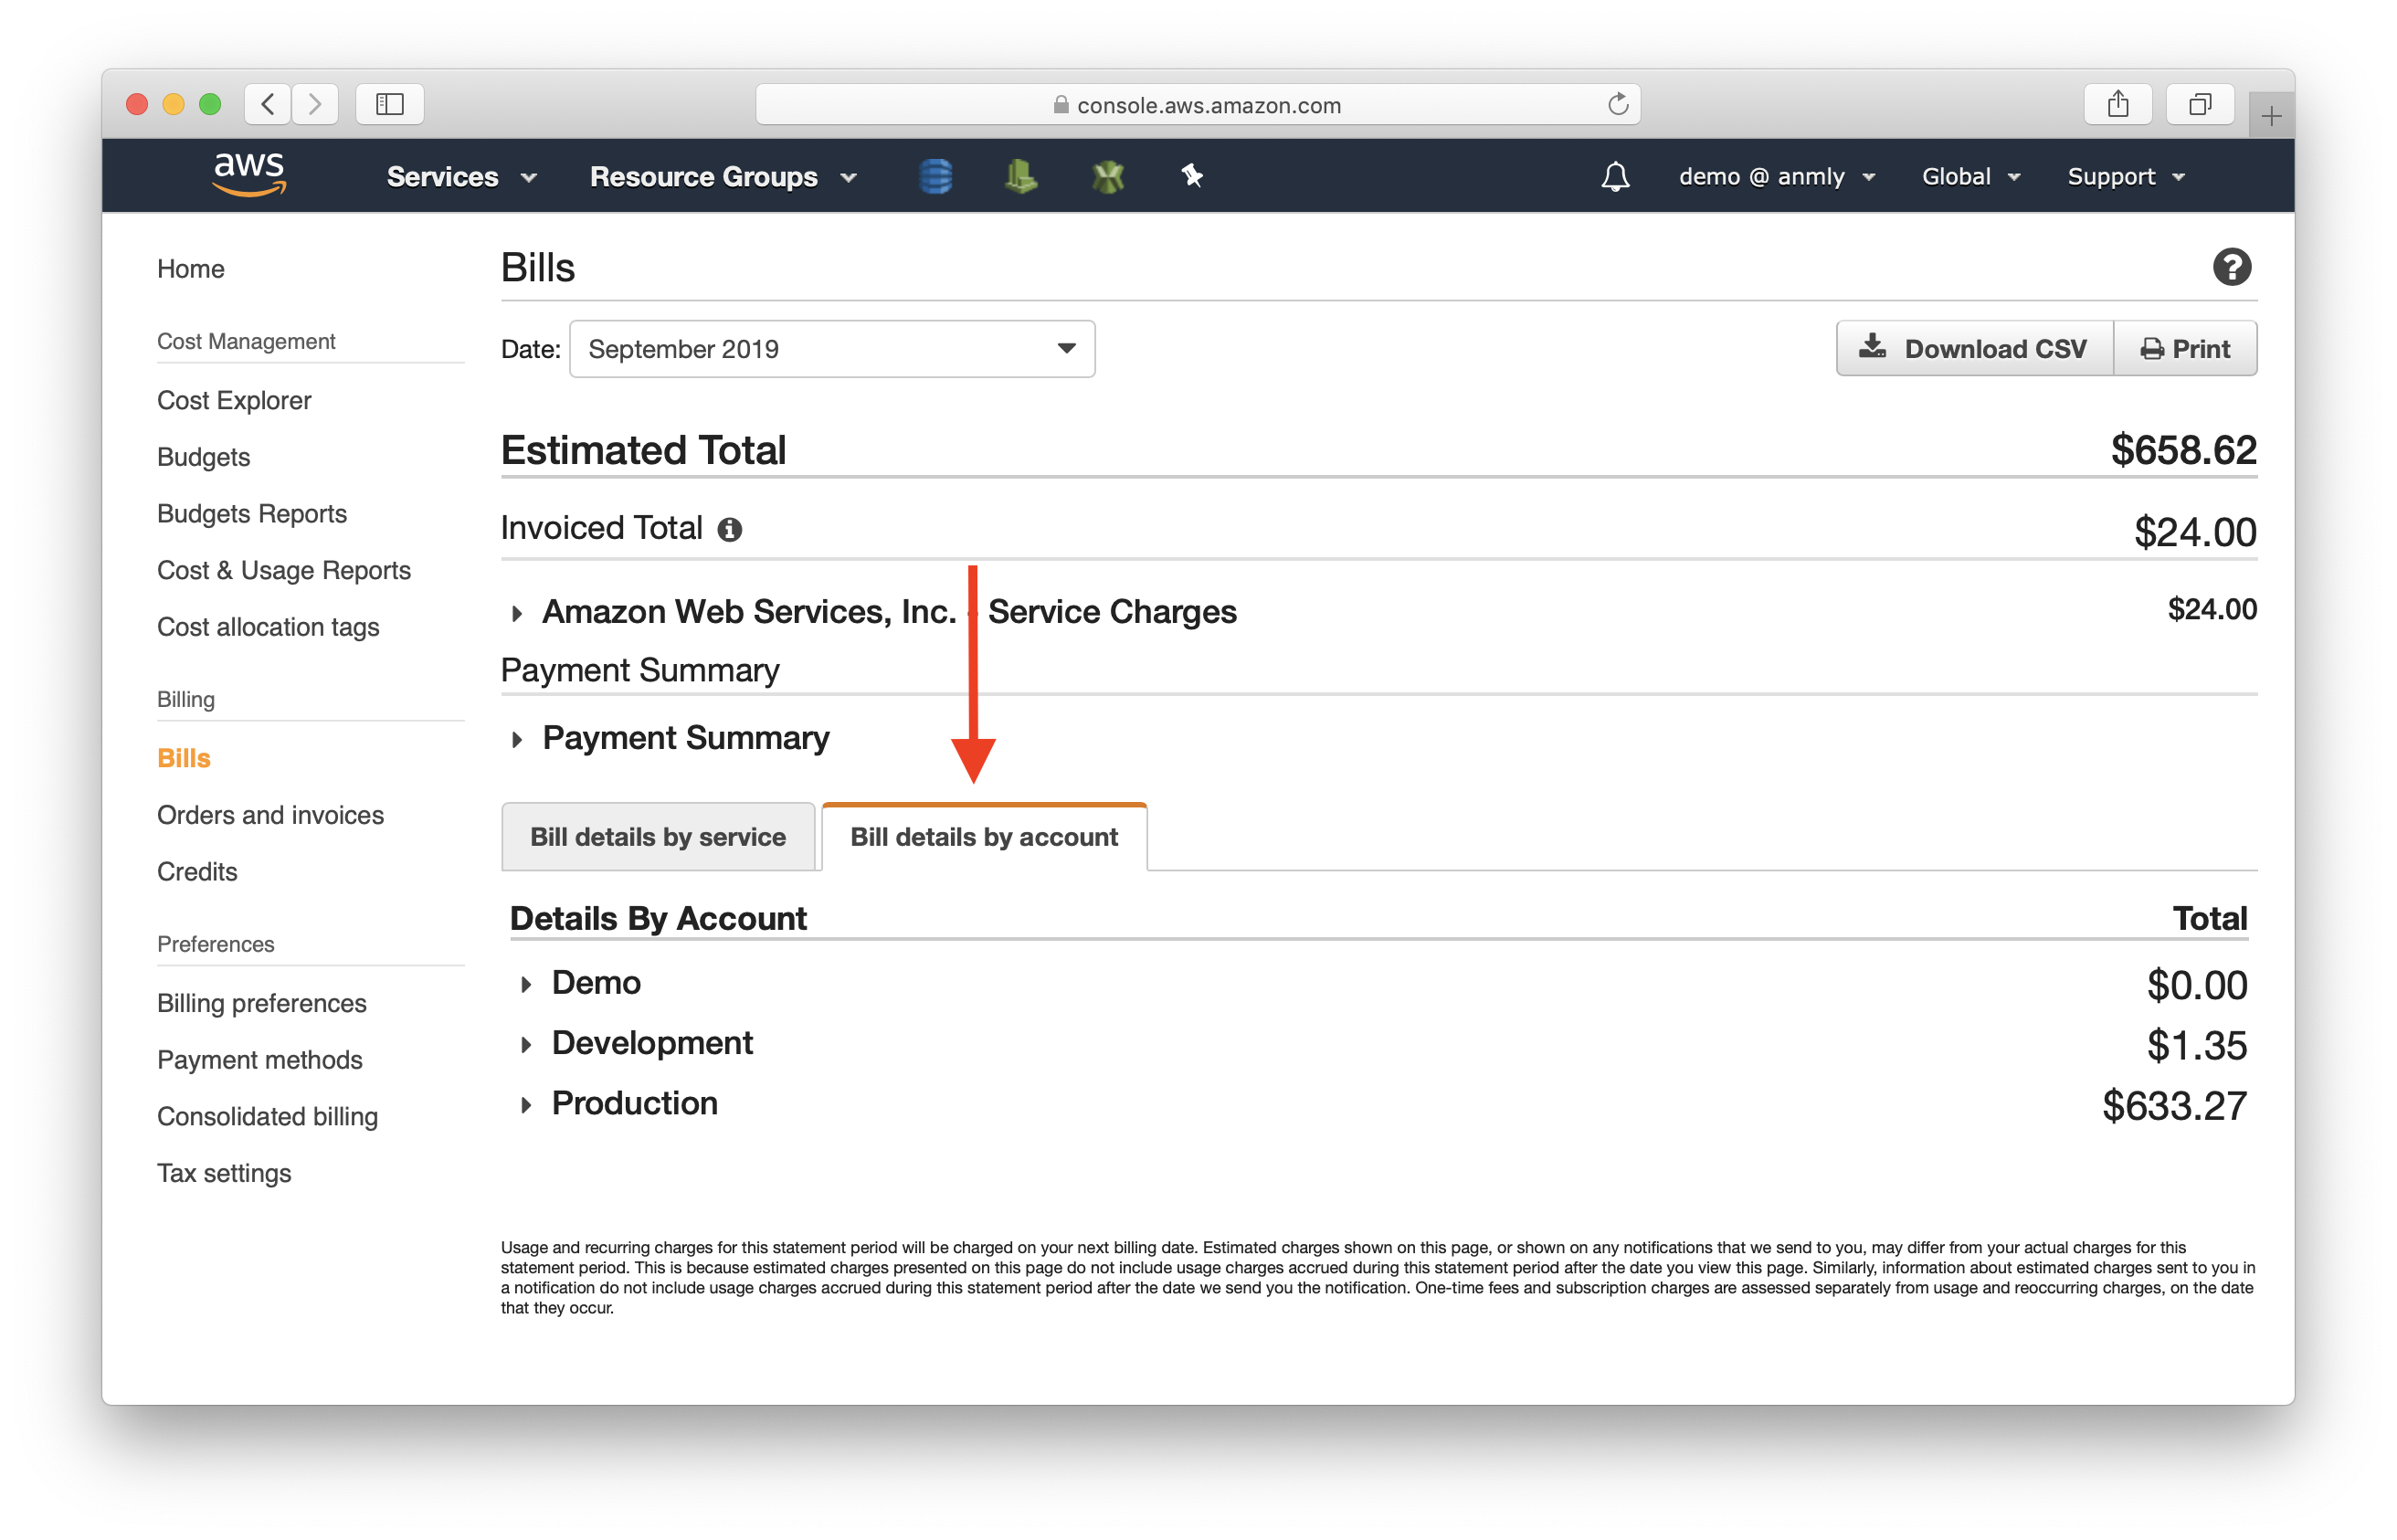 Select Bill details by account screenshot